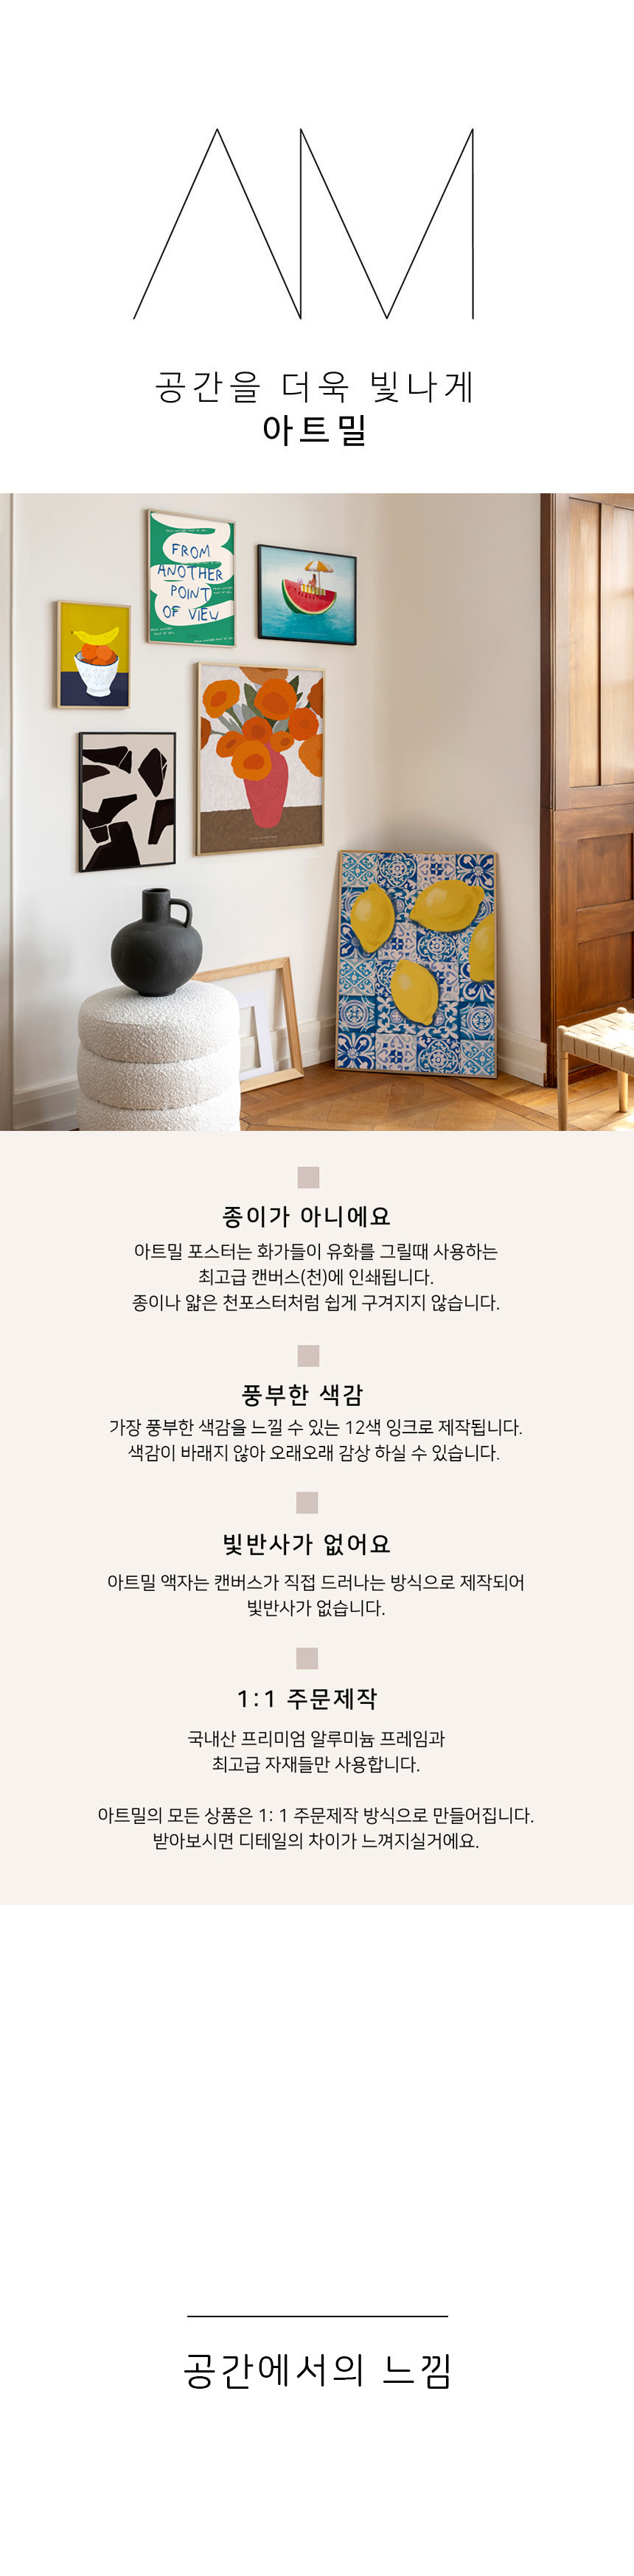 Korean Interior Design Inspiration